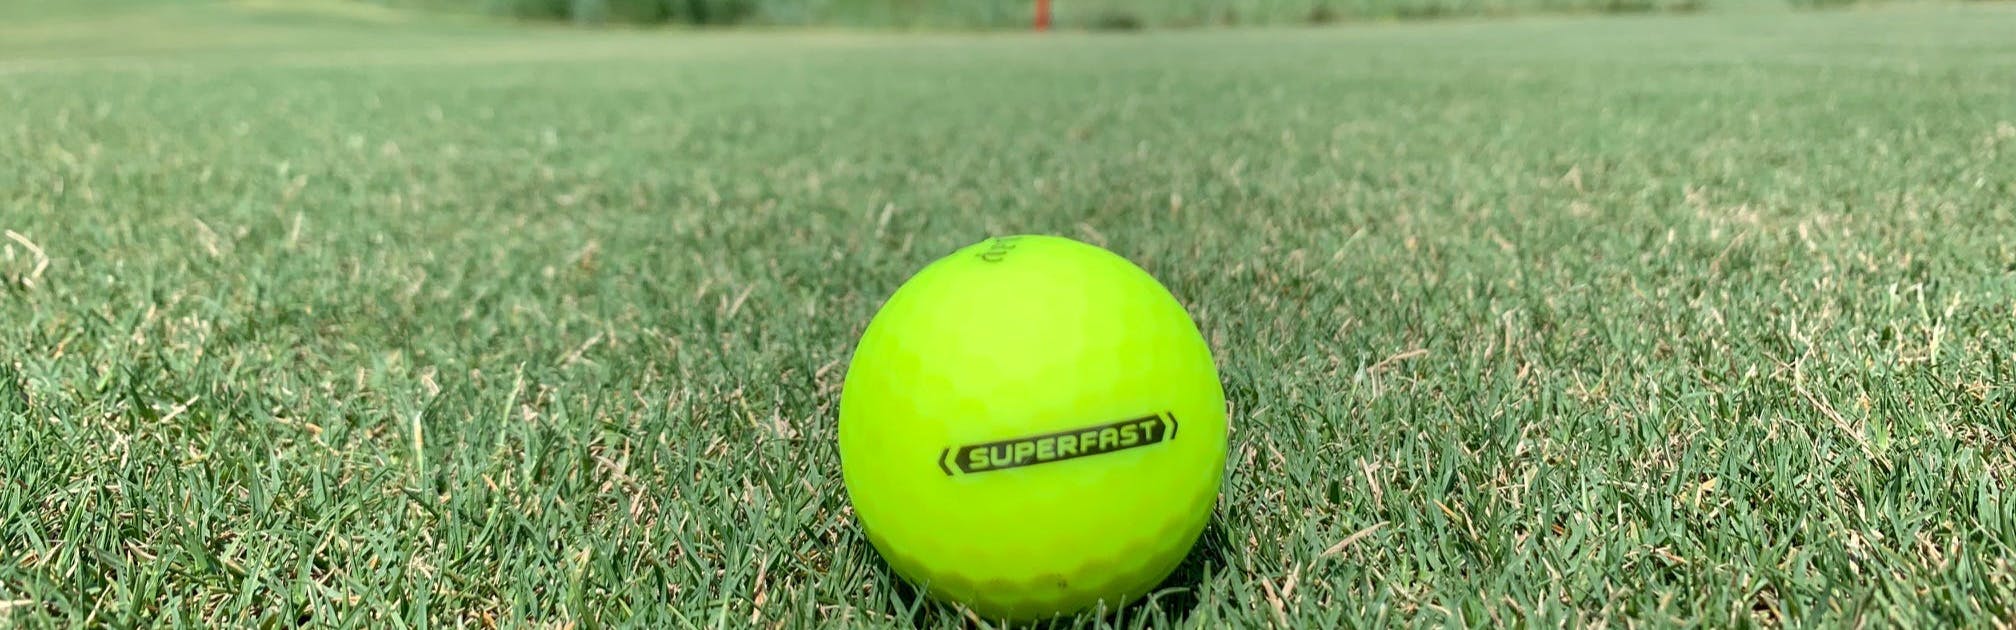 Case for 4 Golf Balls - Dark Green - Smooth Leather